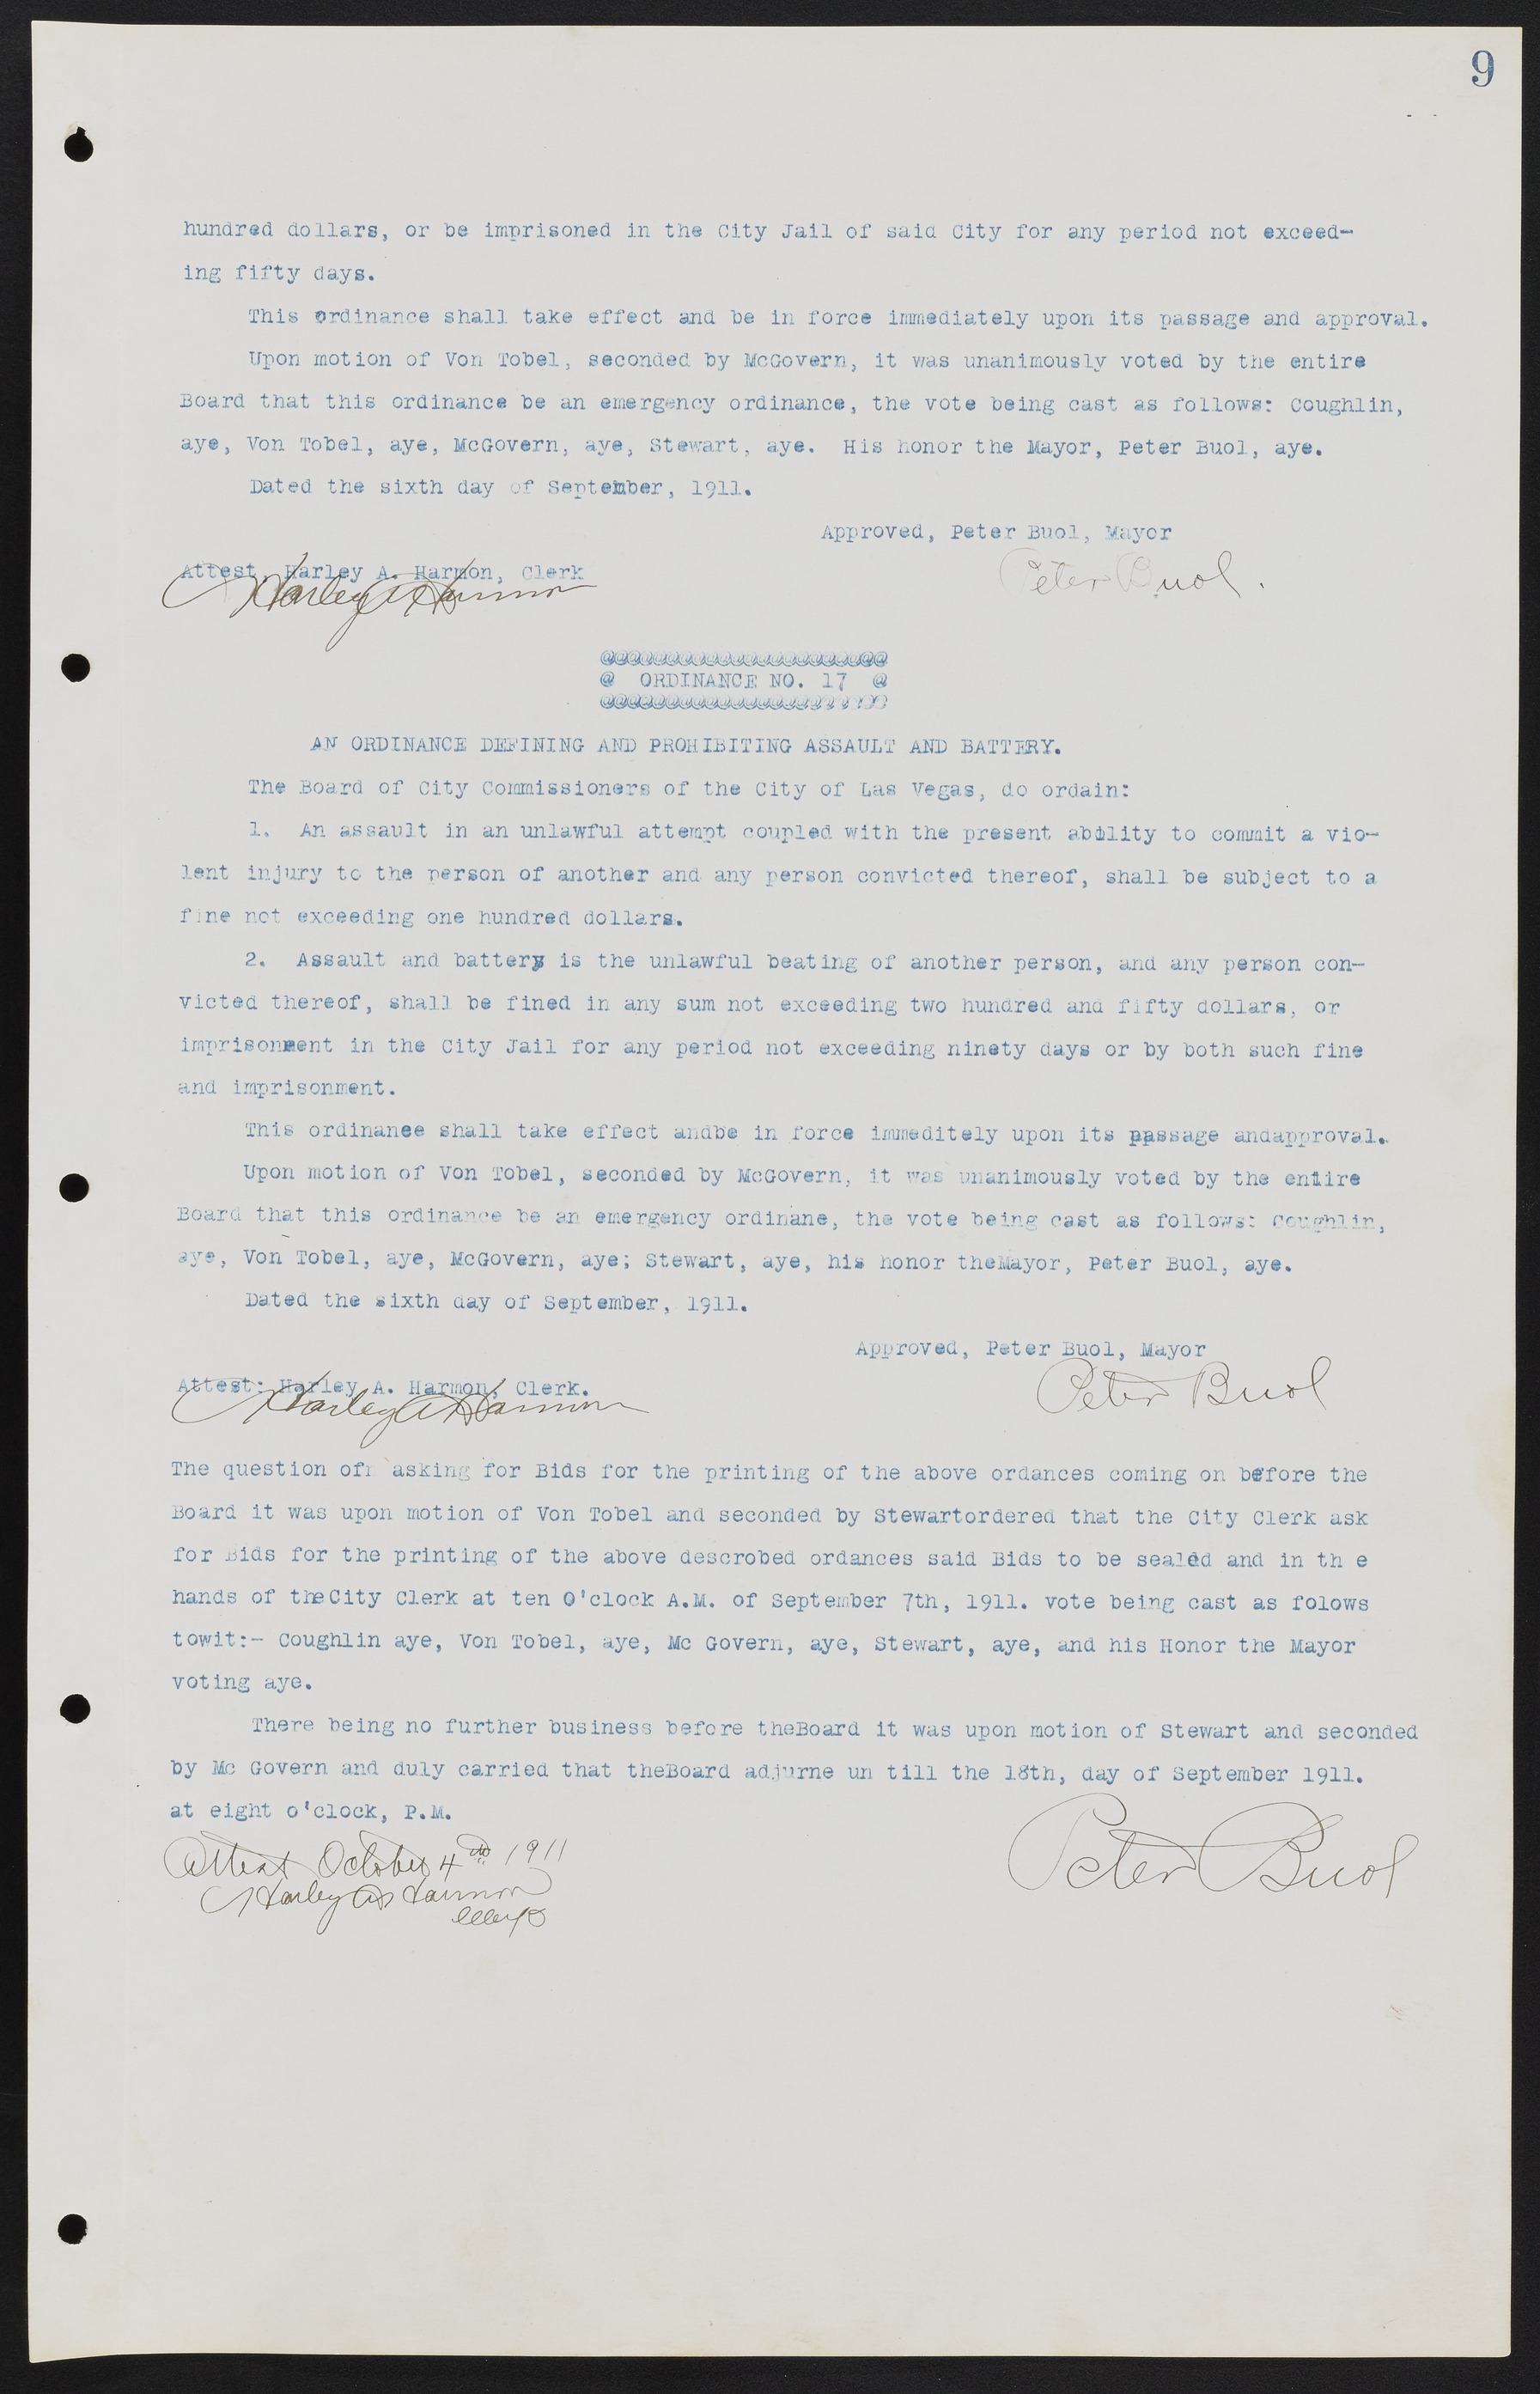 Las Vegas City Commission Minutes, June 22, 1911 to February 7, 1922, lvc000001-23